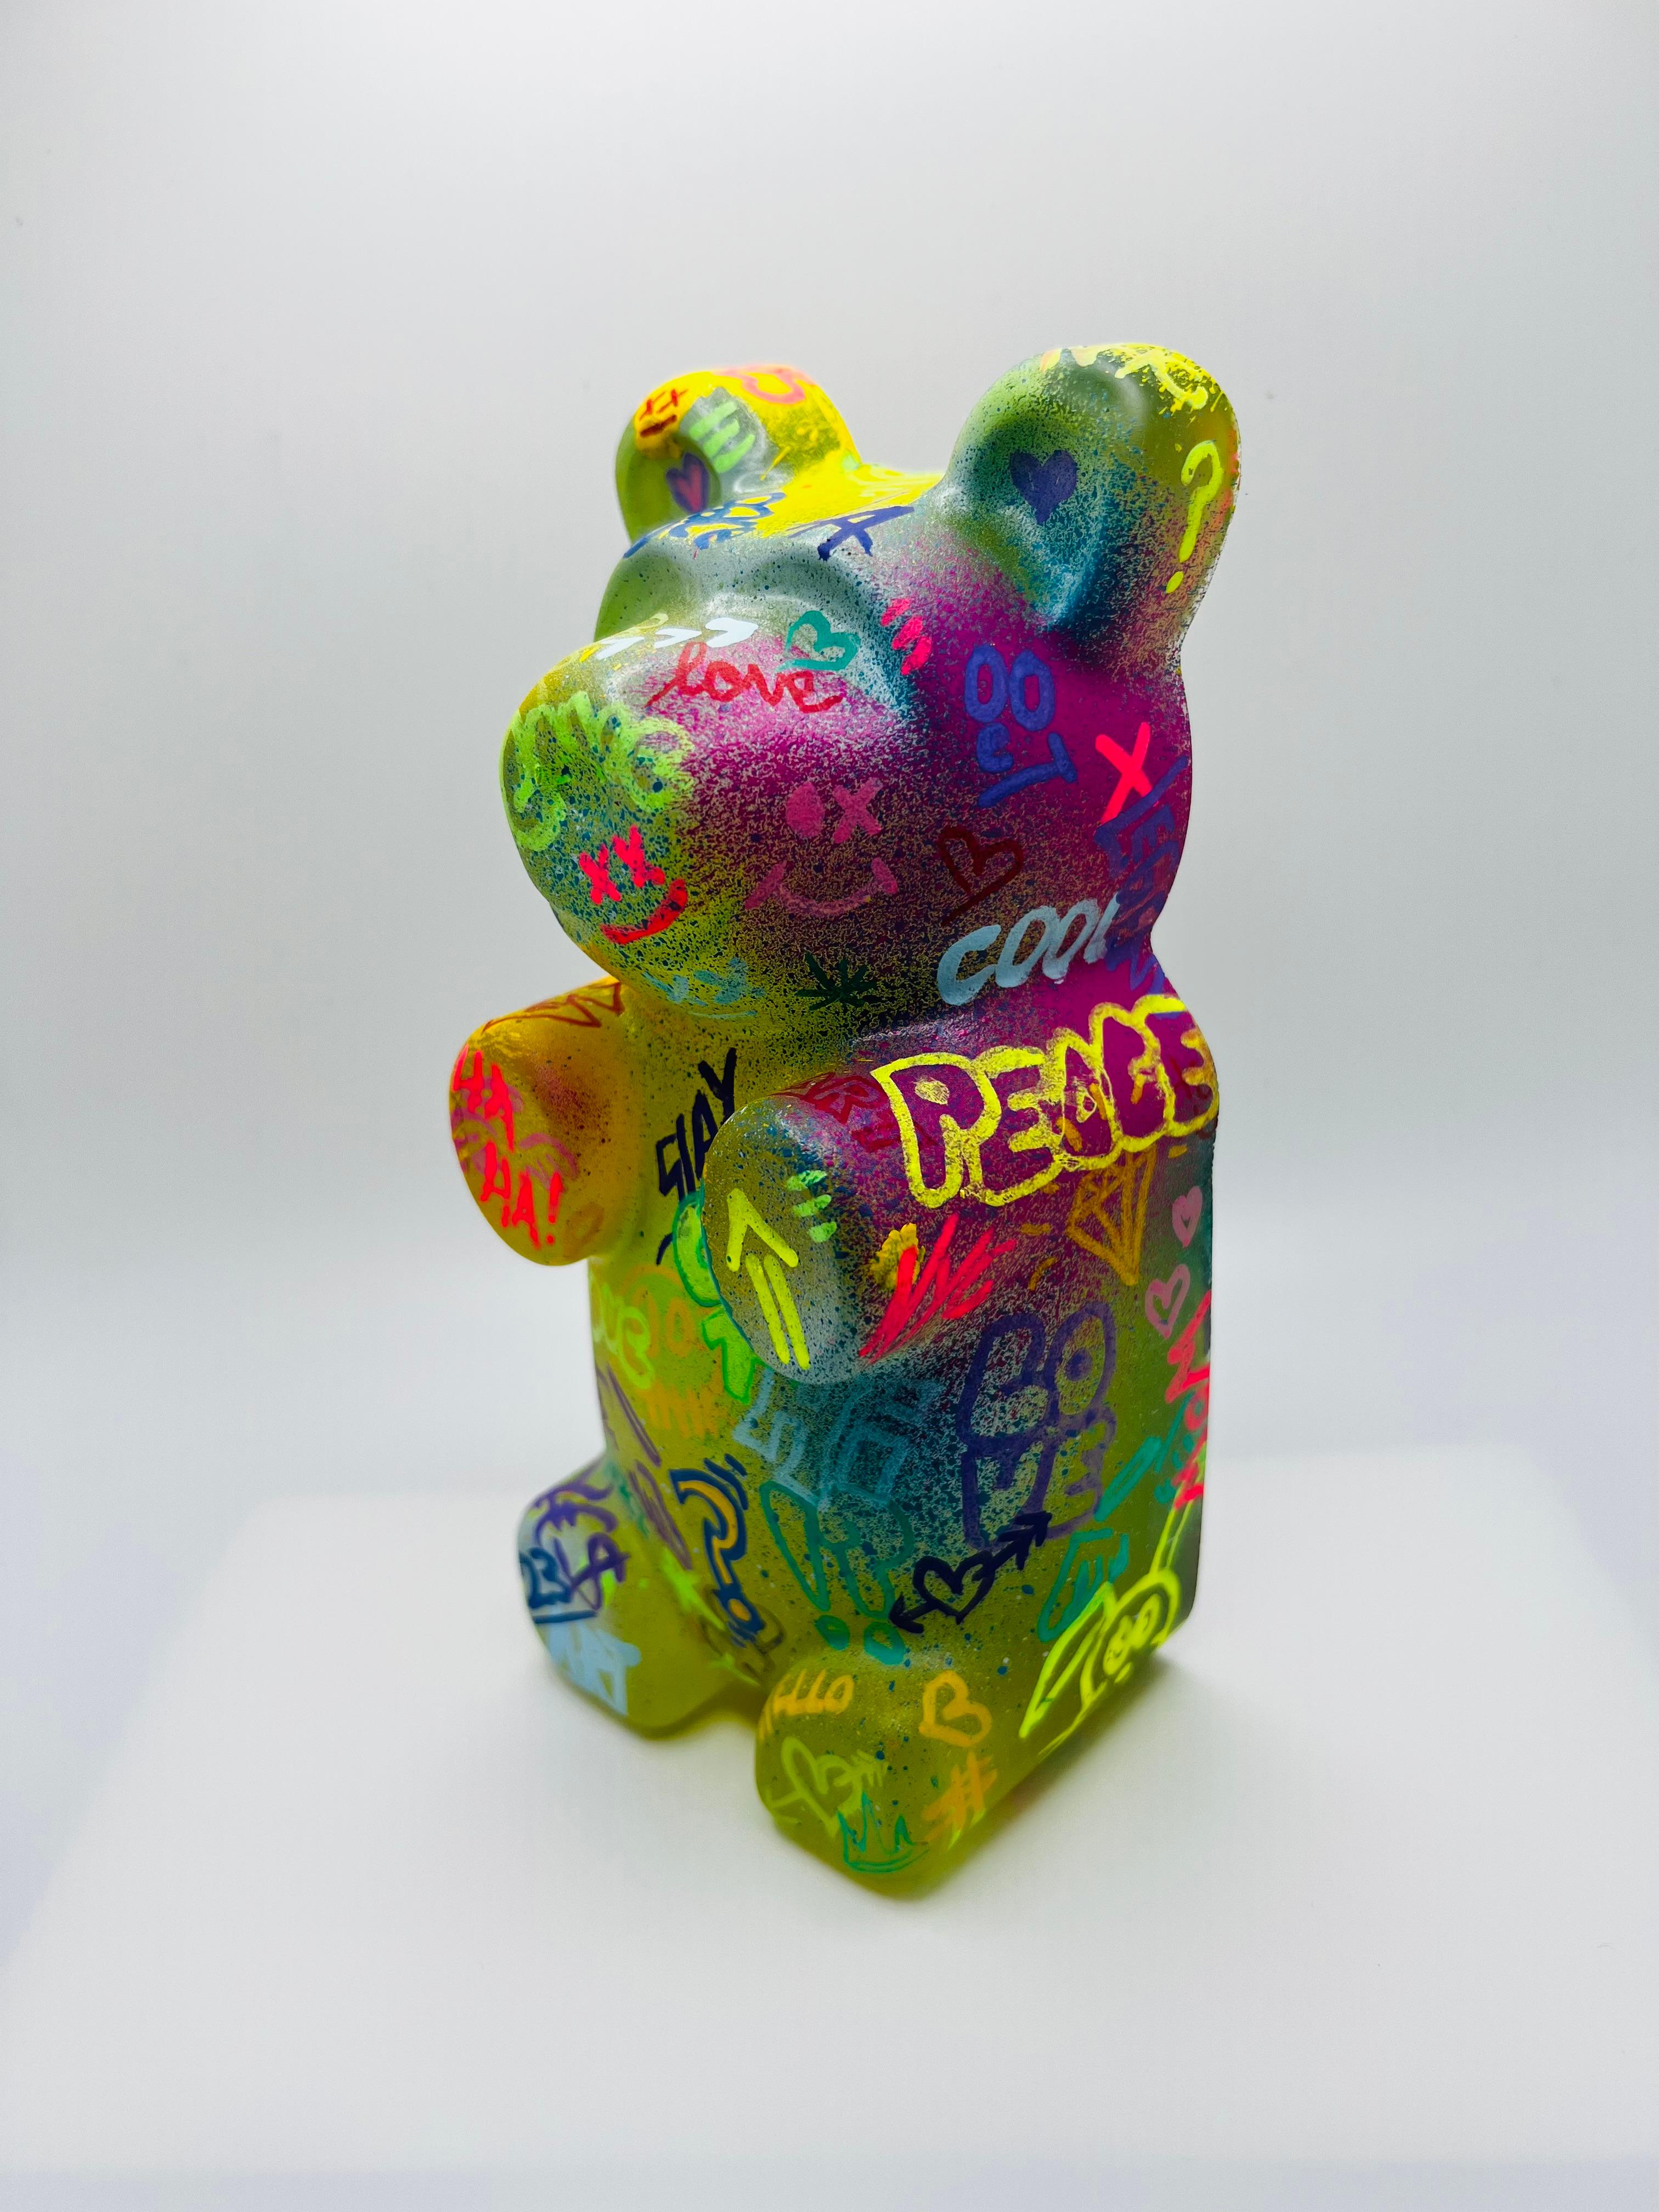 Graffiti Gummy bear 3, street art, pop art, colorful, contemporary, sculpture - Mixed Media Art by Sahara Novotny